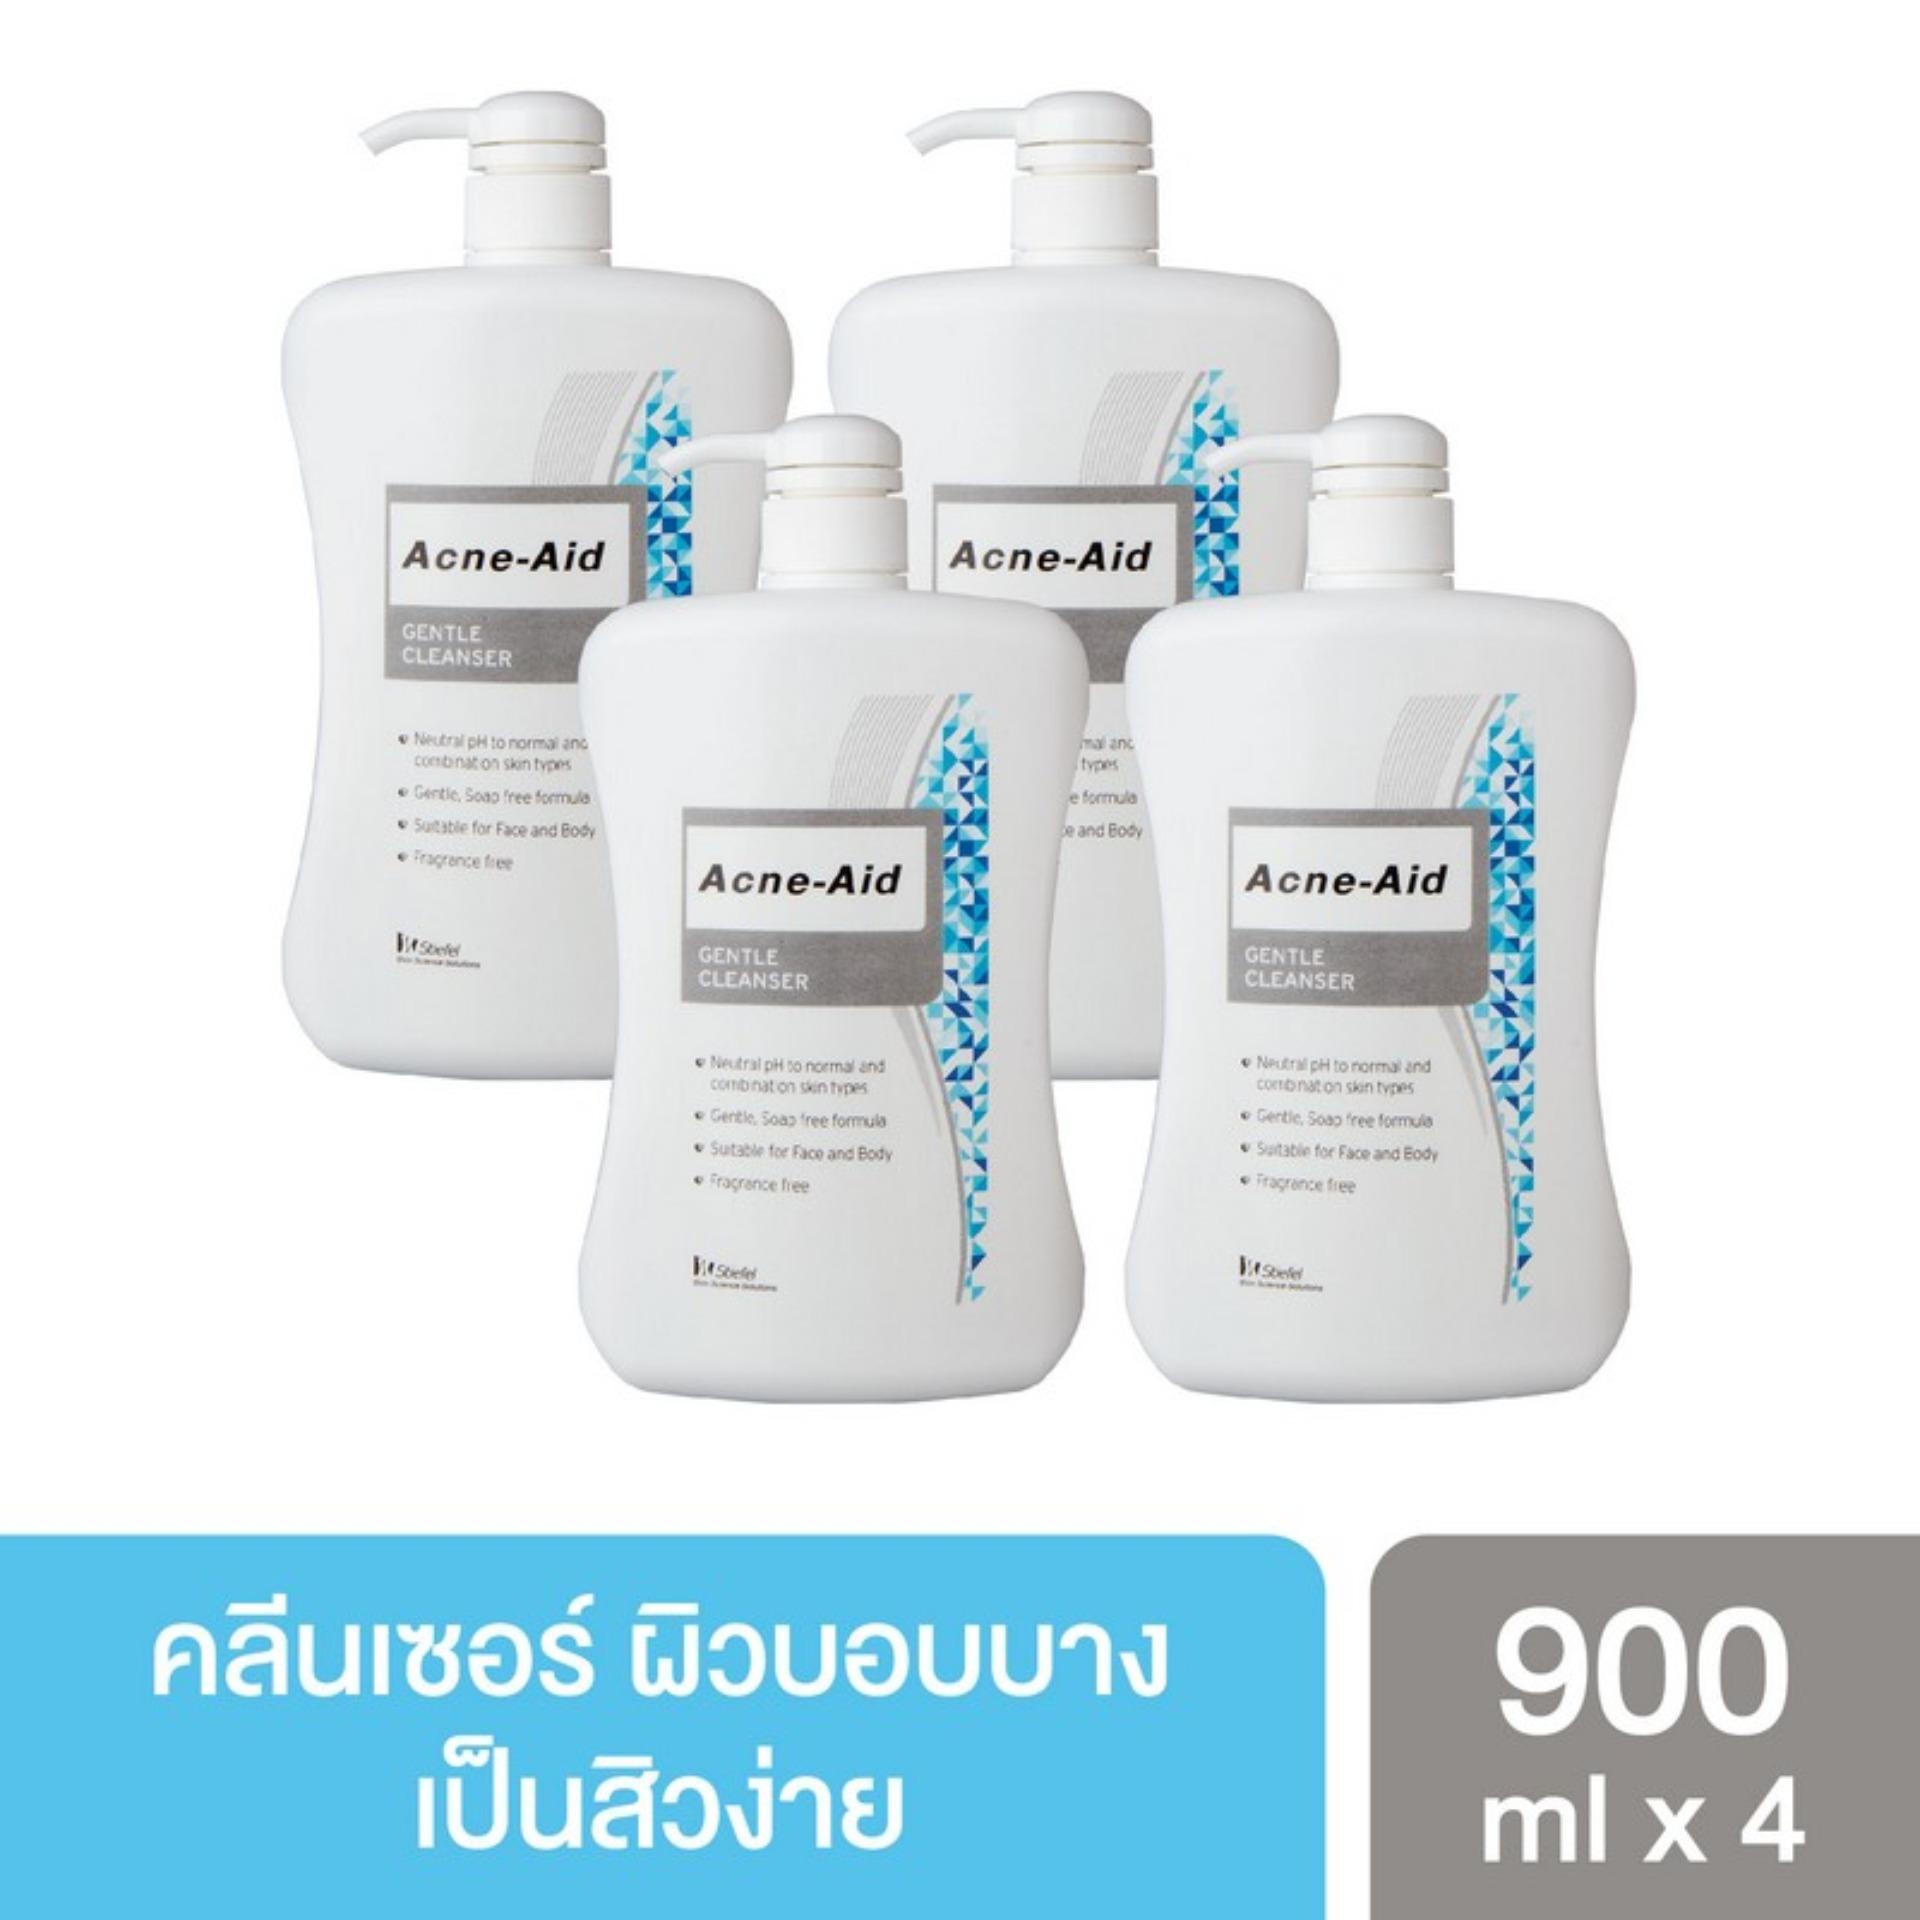 Acne-Aid แอคเน่-เอด เจนเทิ่ล คลีนเซอร์ คลีนเซอร์สำหรับปัญหาสิว เหมาะสำหรับผิวแห้งถึงผิวผสม รวมถึงผิวแพ้ง่าย สิวผด 900 มล. (แพ็คสี่) Acne-Aid Gentle Cleanser for acne prone skin ,Suitable for  dry, combination skin or sensitive skin with acne 900ml x4